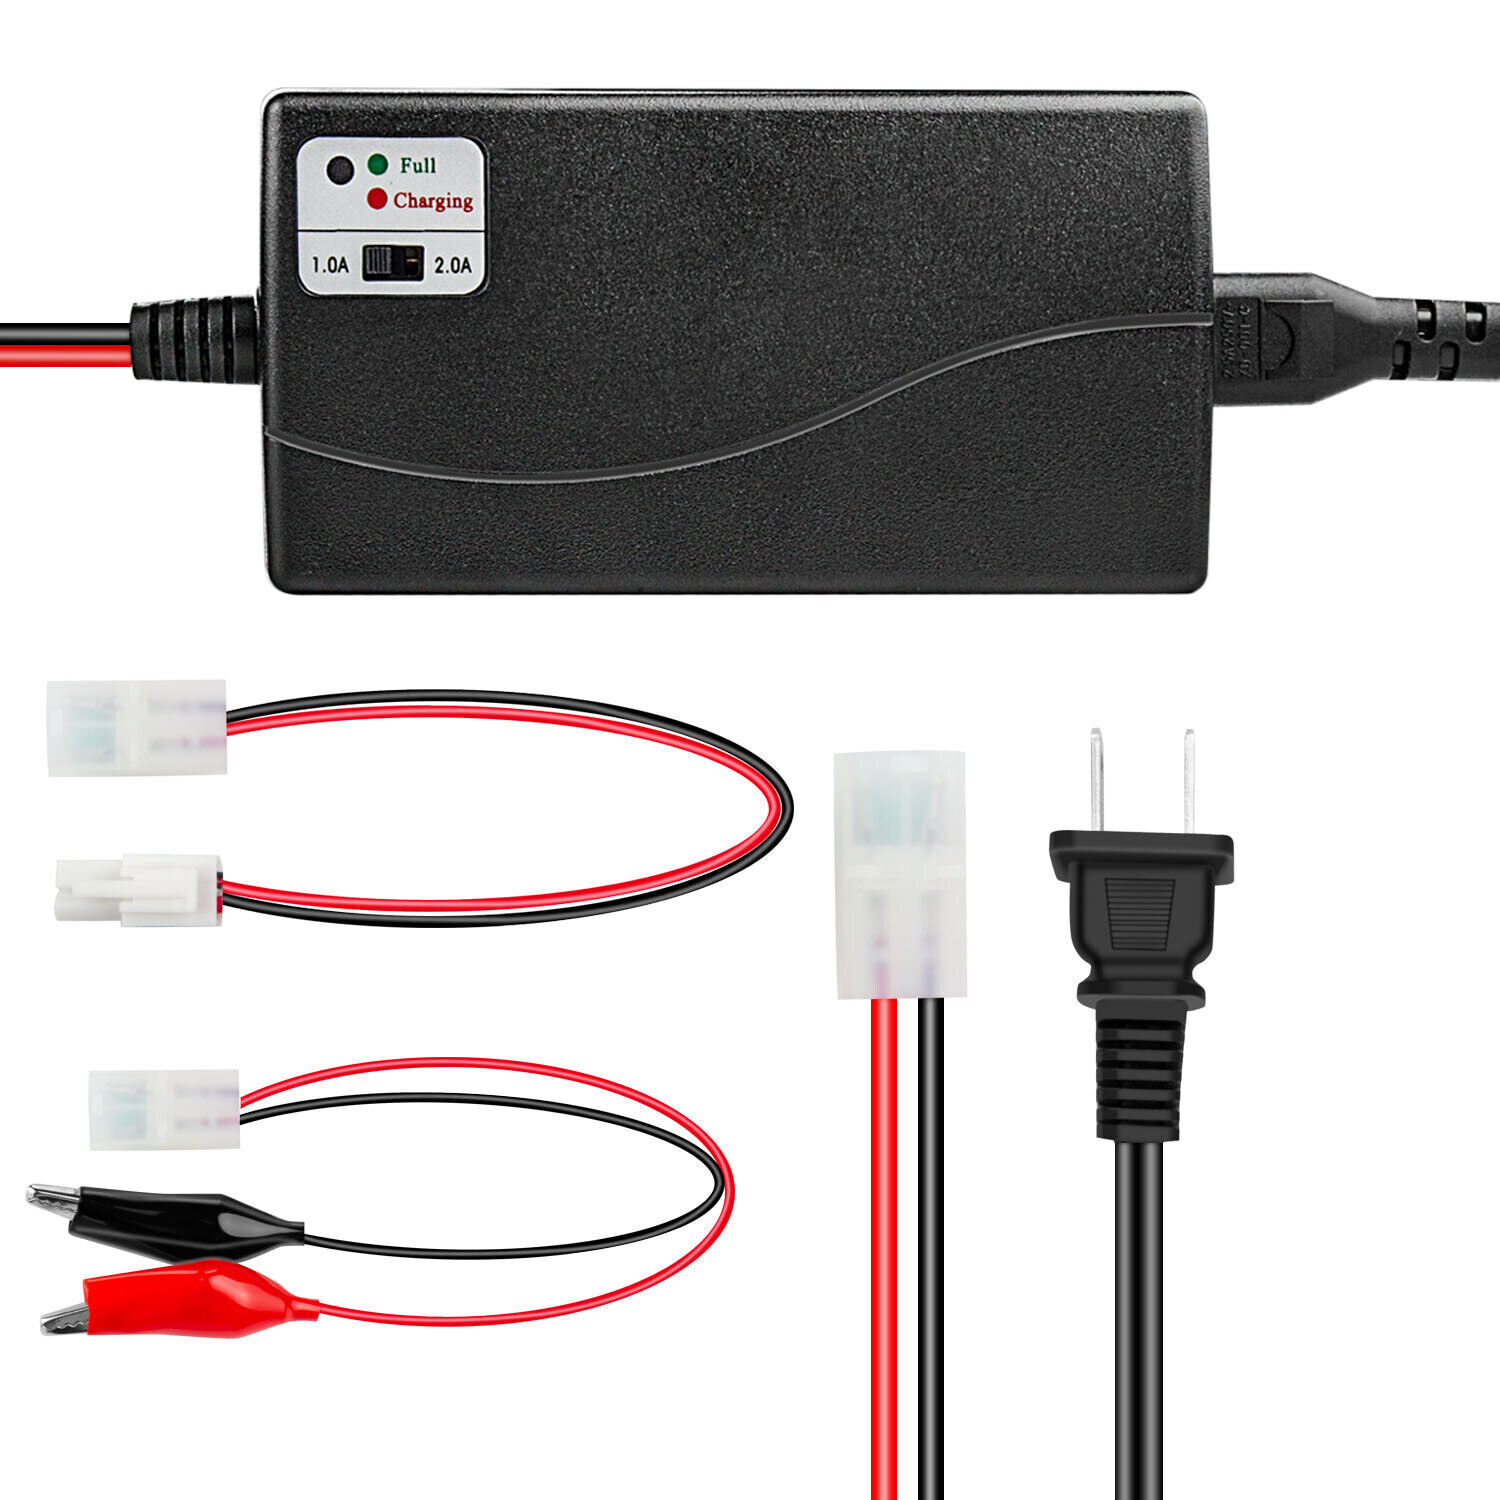 thinkstar 6V-12V Balance Digital Charger Rc Lipo Nimh Battery Charger Adapter For Imax B6